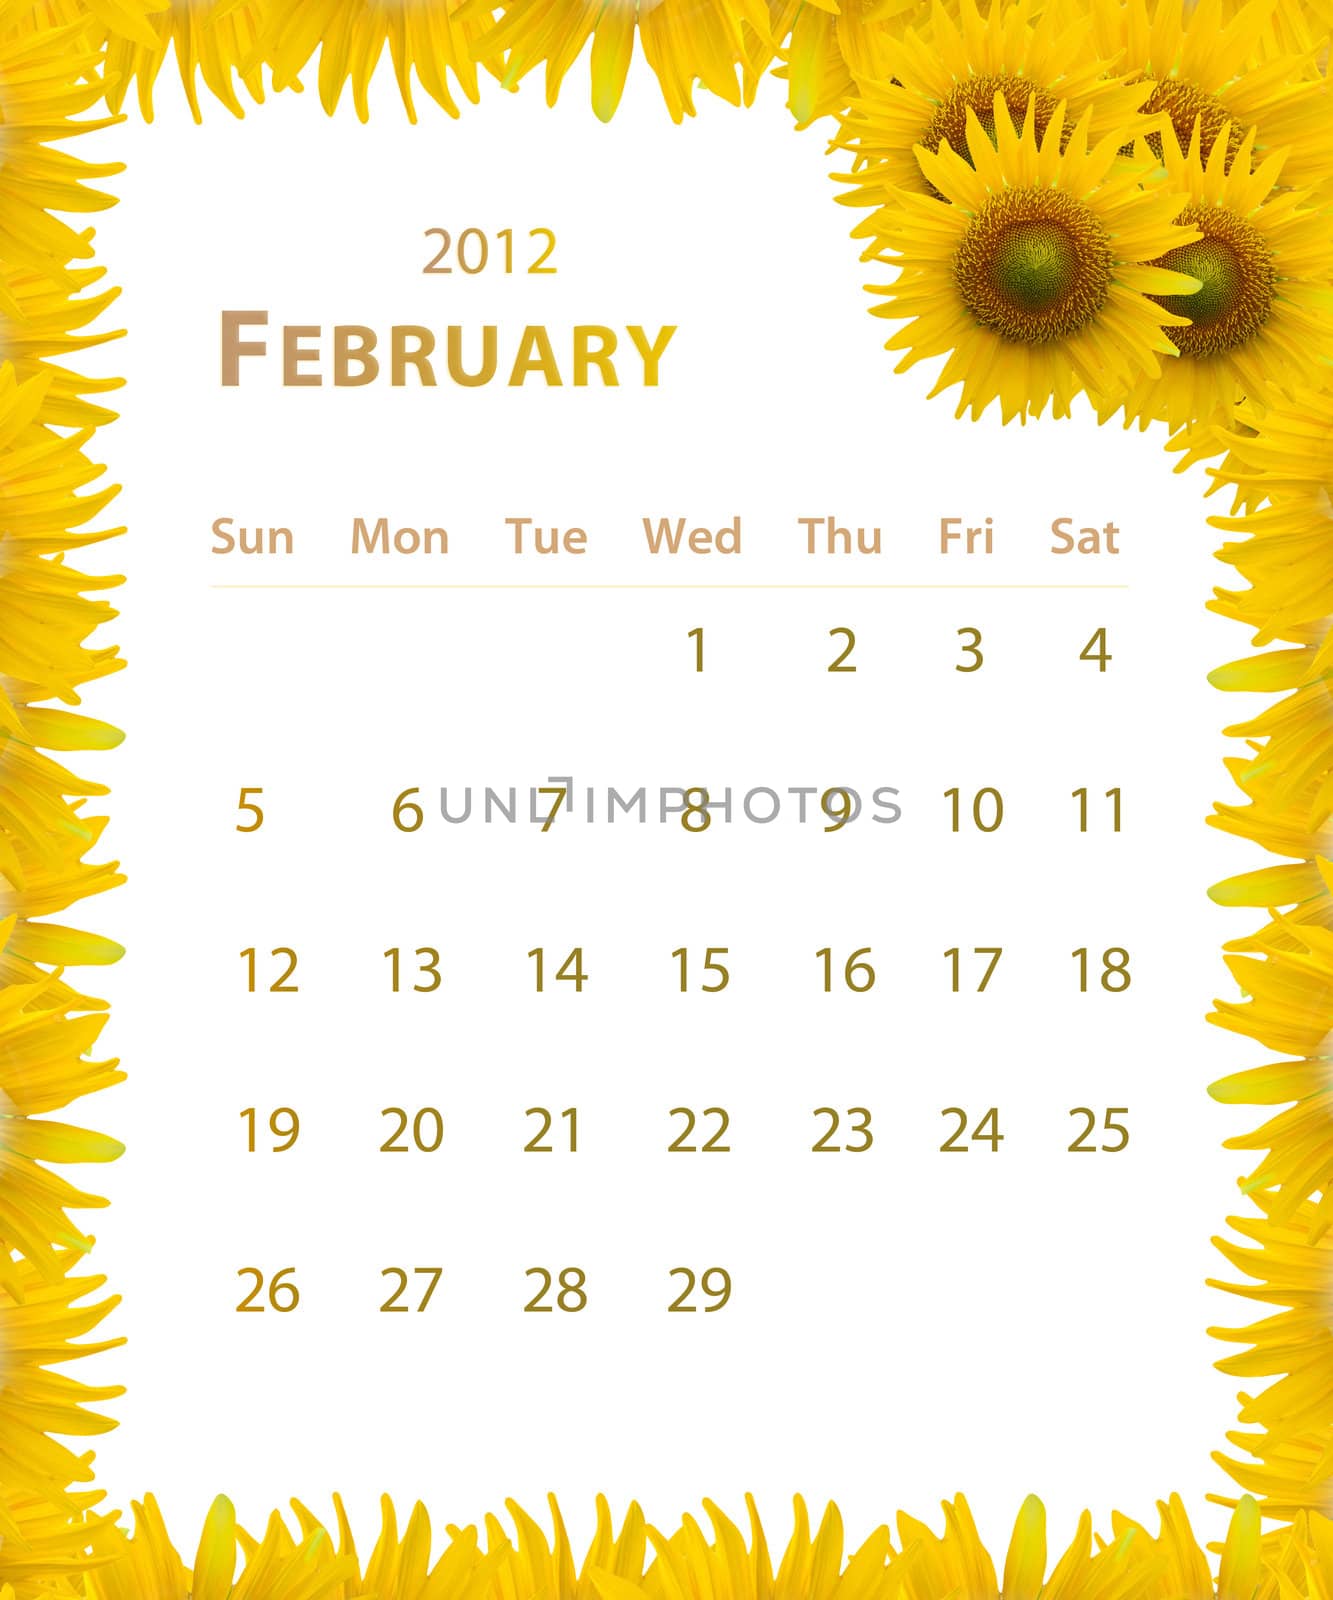 2012 year calendar ,February with Sunflower frame design by jakgree